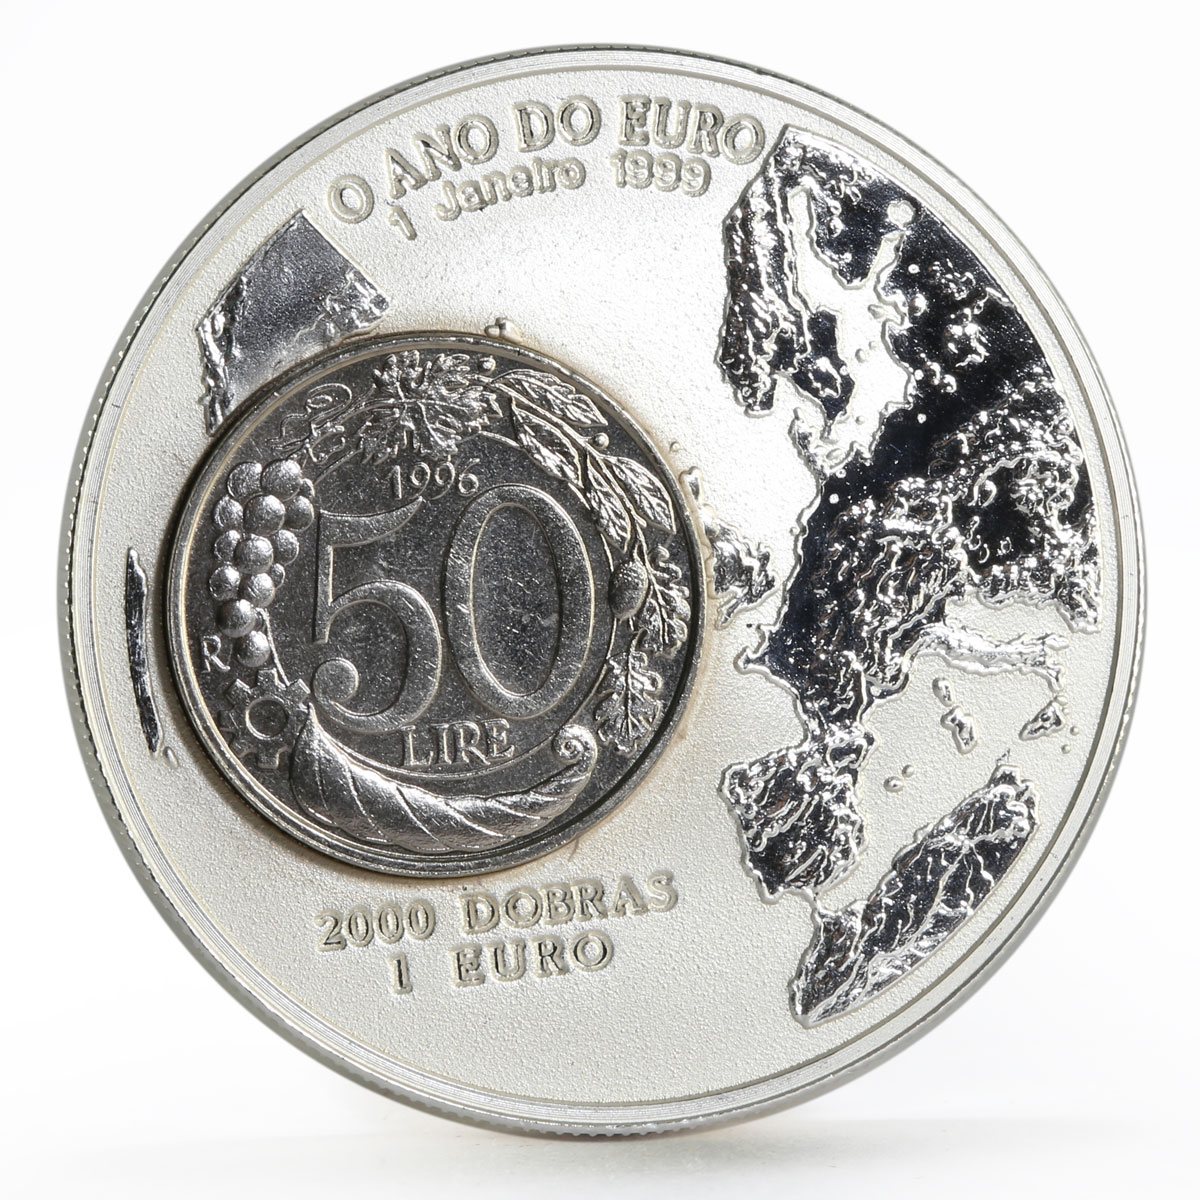 Sao Tome and Principe 2000 dobras Year of the Euro 50 Lira bimetal coin 1999